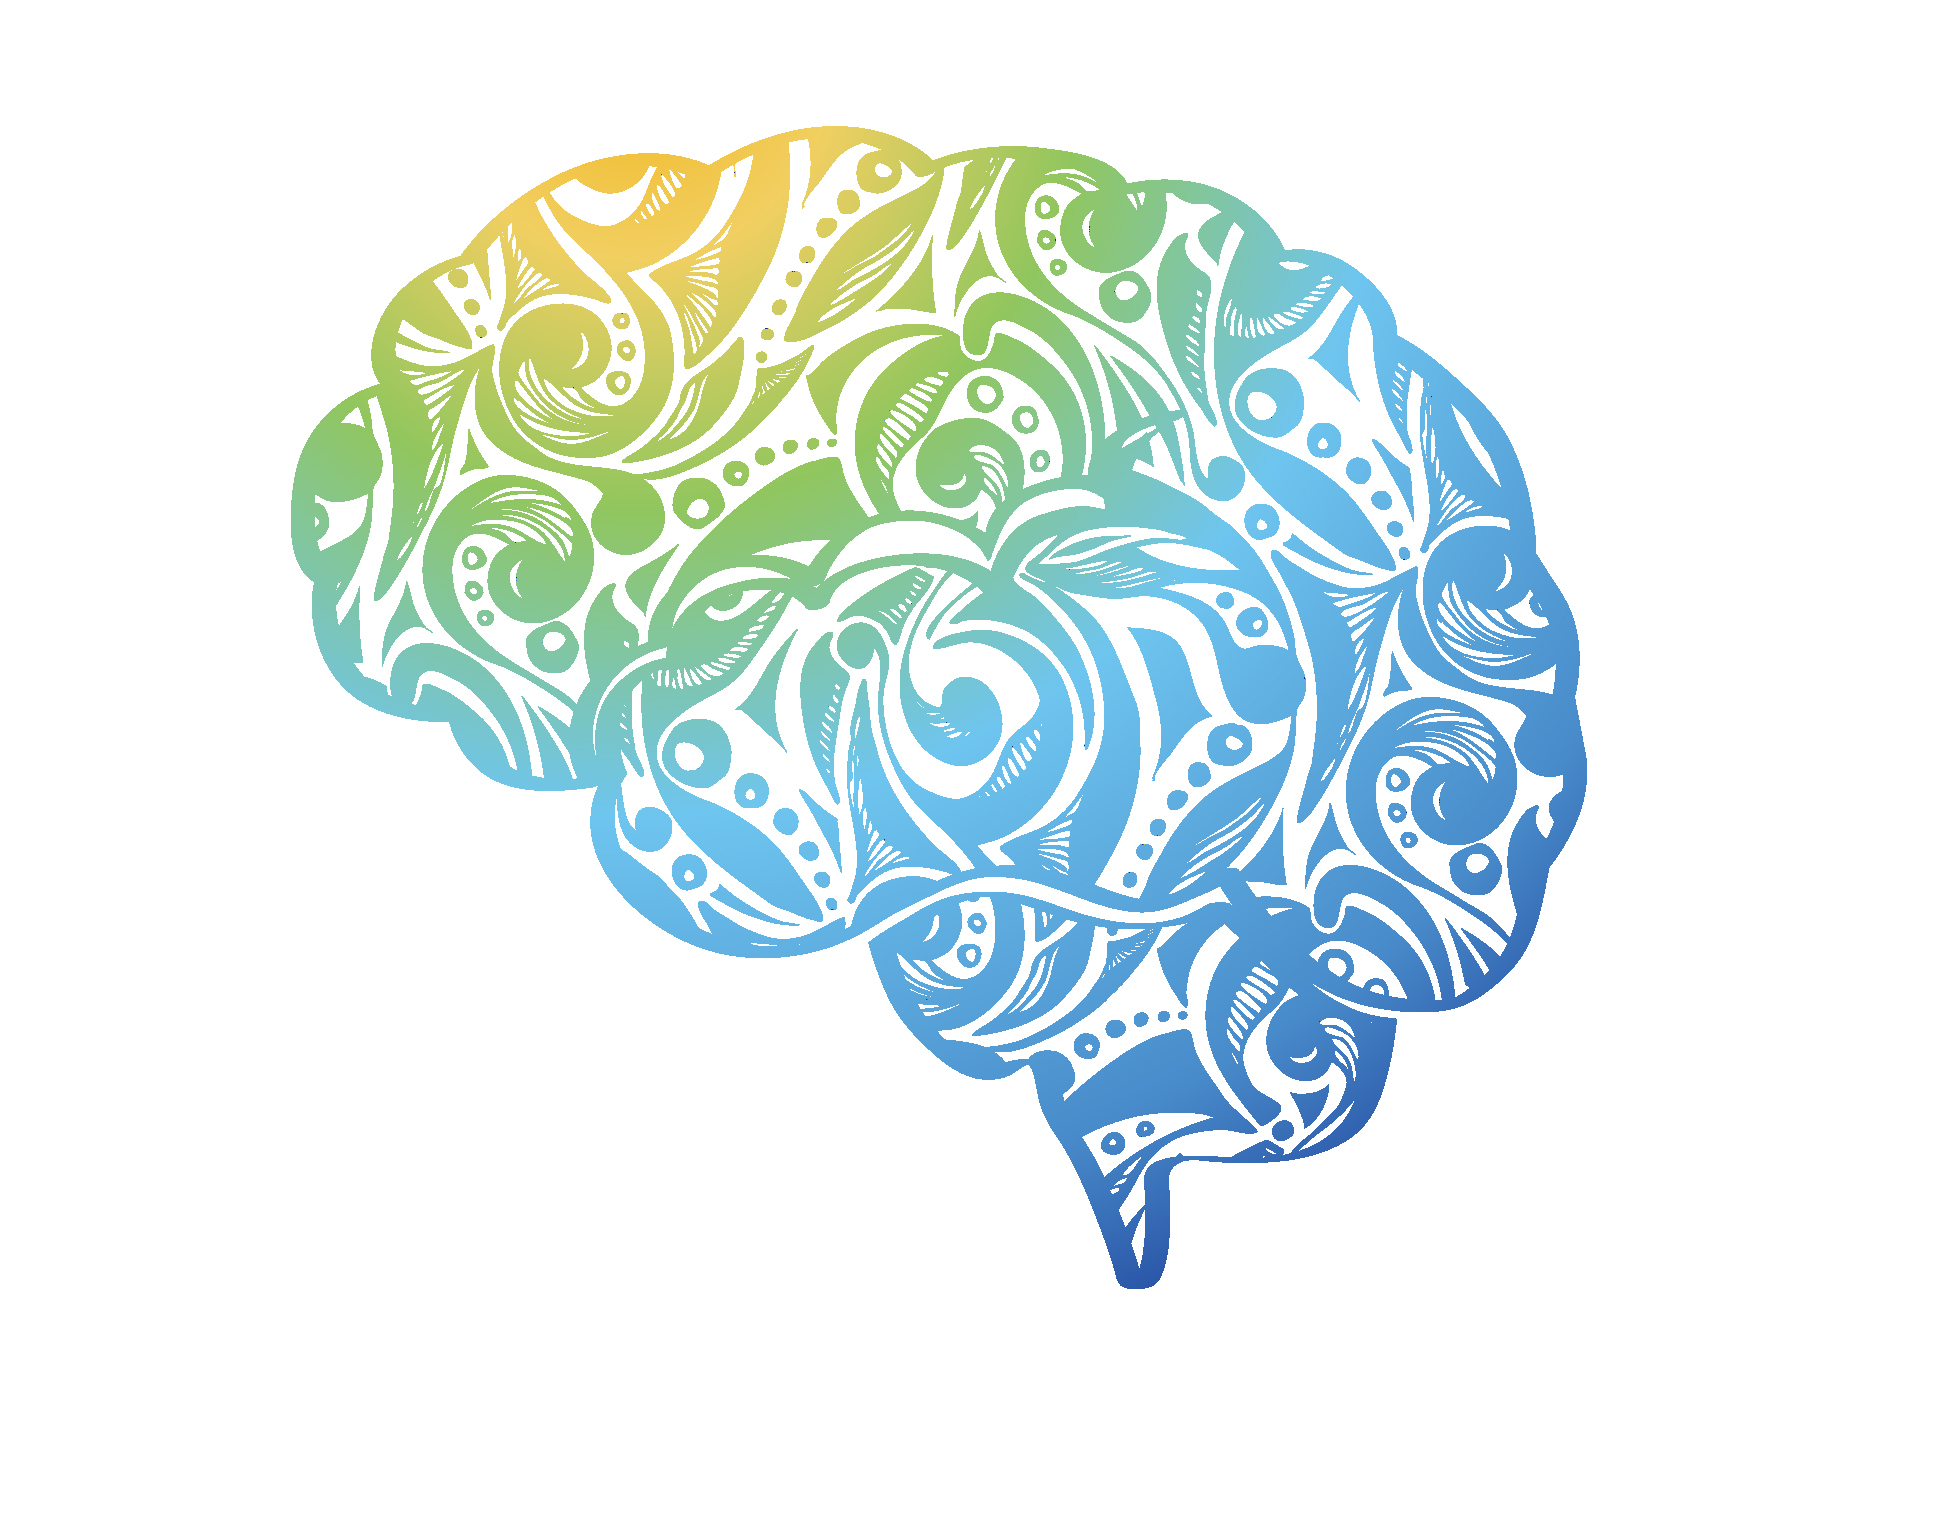 brain illustration vector free download